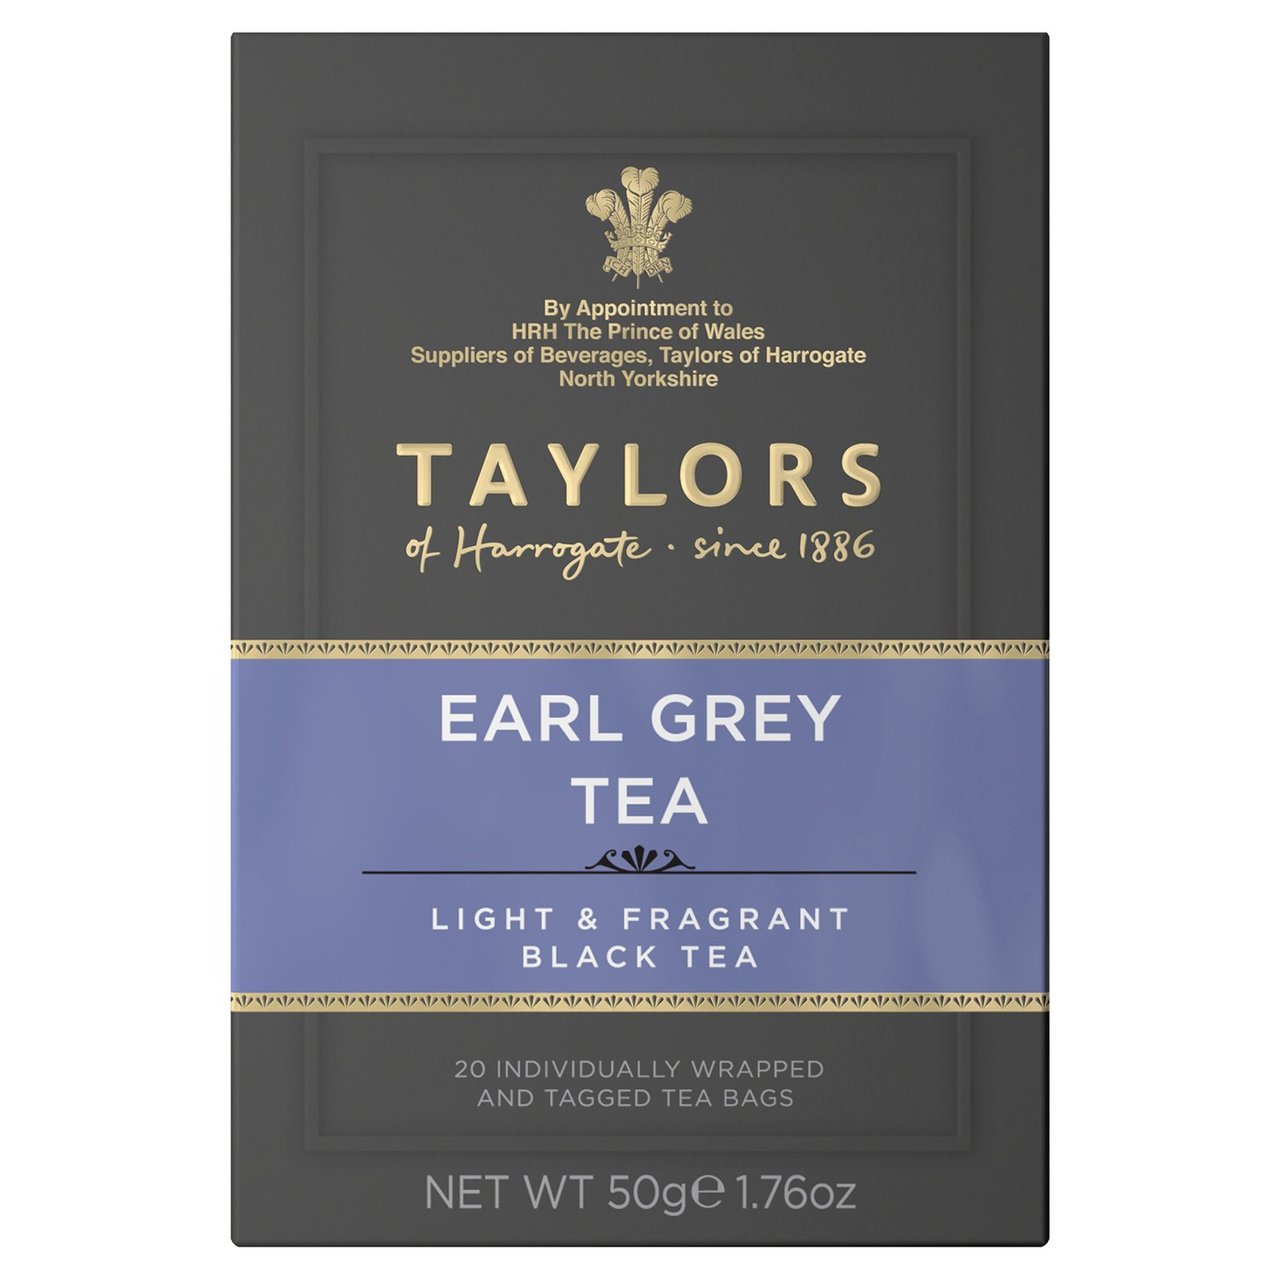 Earl Grey Tea - The Great Yorkshire Shop